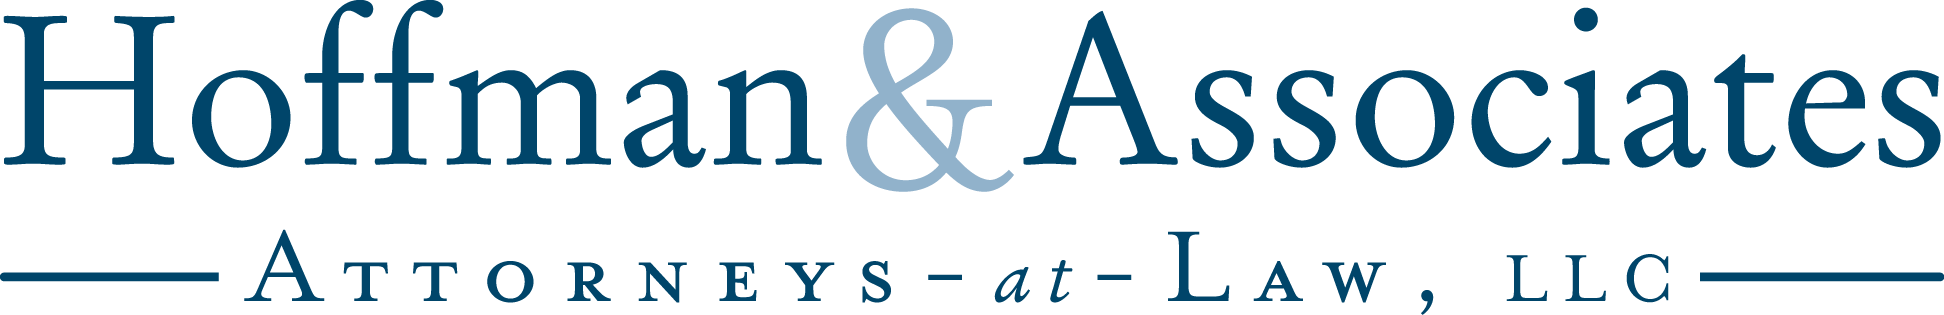 Hoffman & Associates Logo